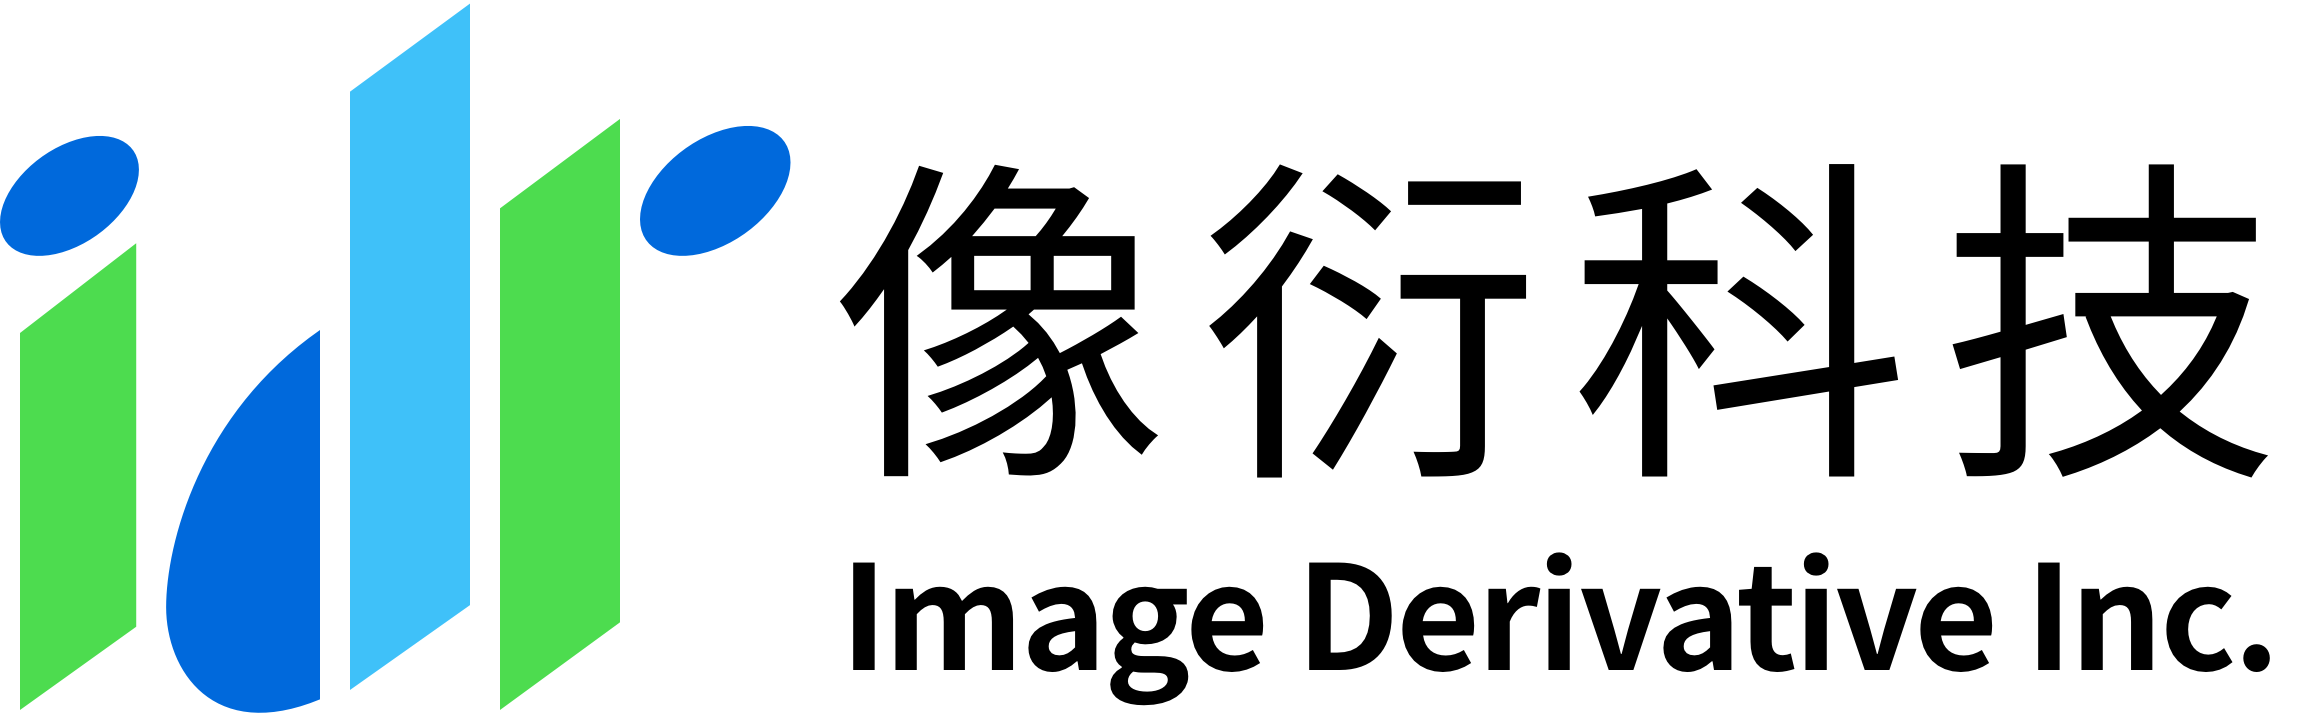 ImageDerivative logo